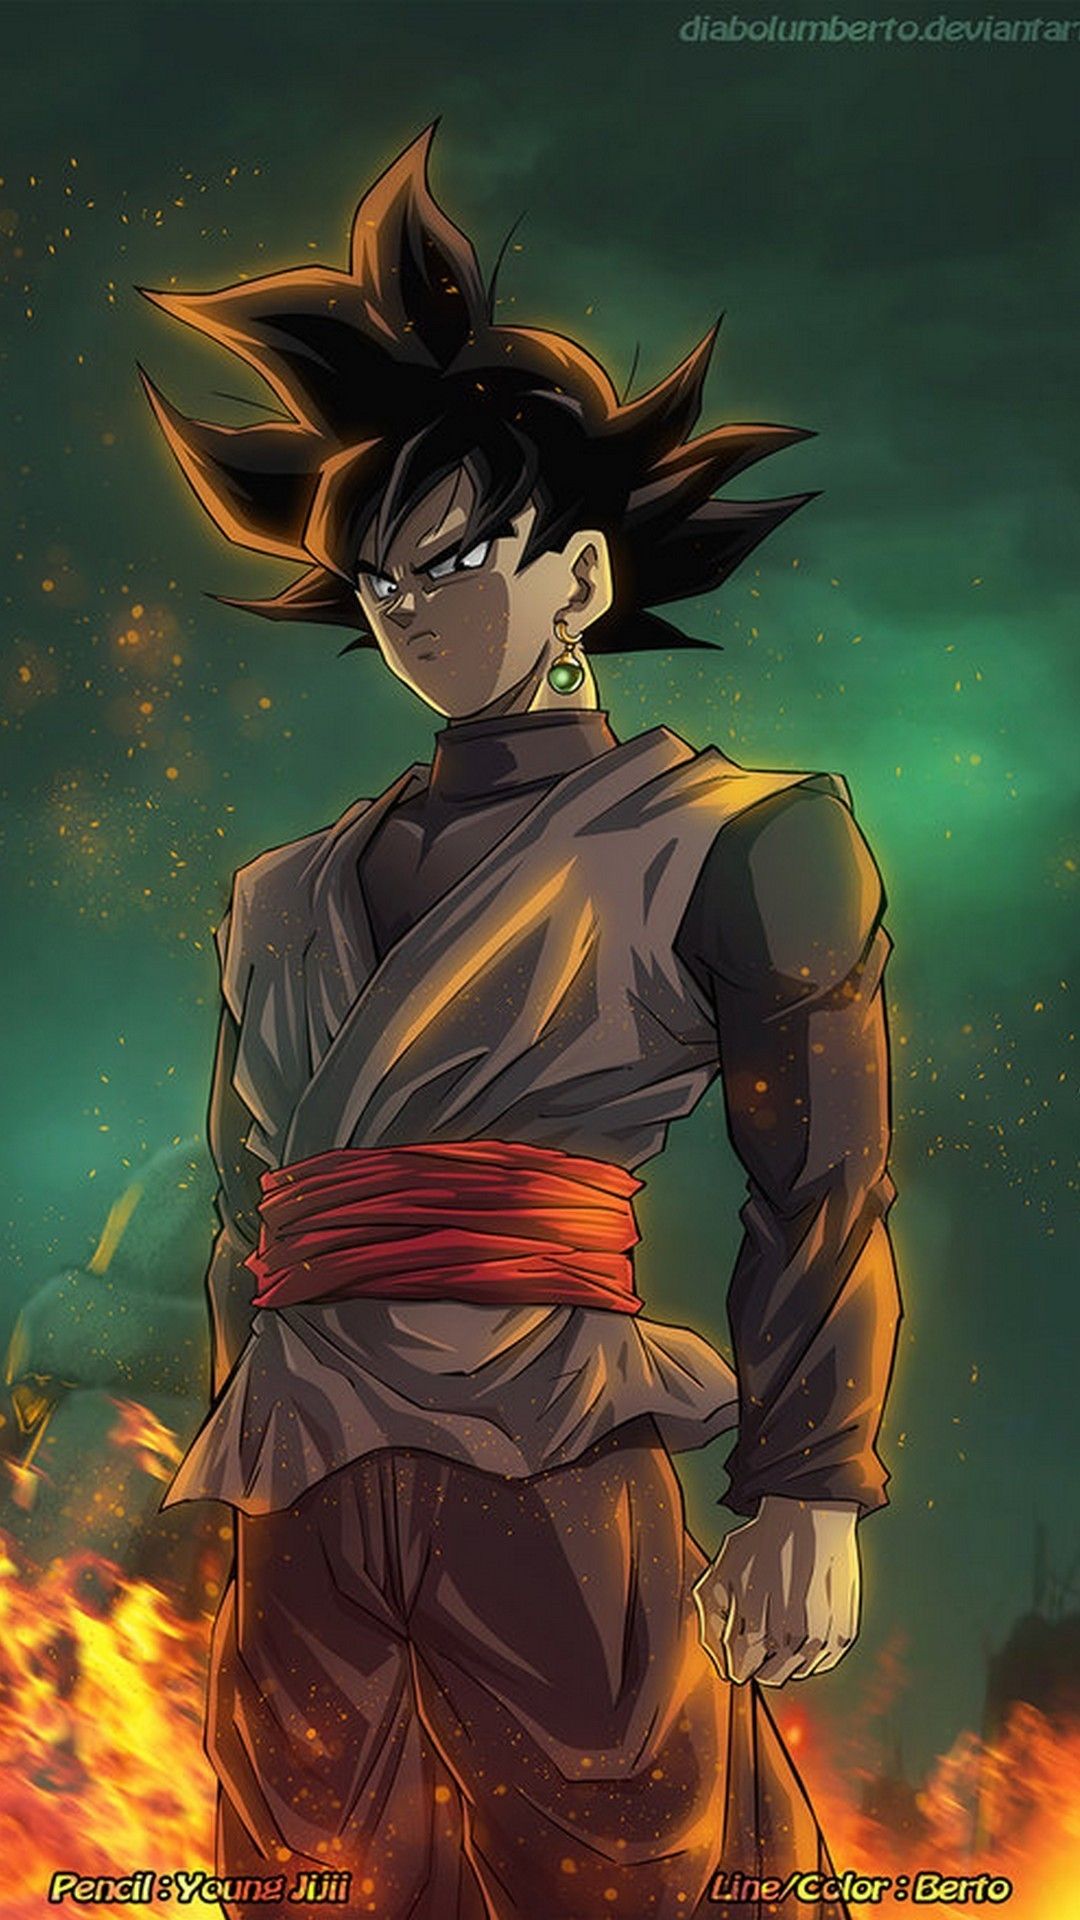 Wallpaper Android Black Goku - 2019 fondos de pantalla de Android